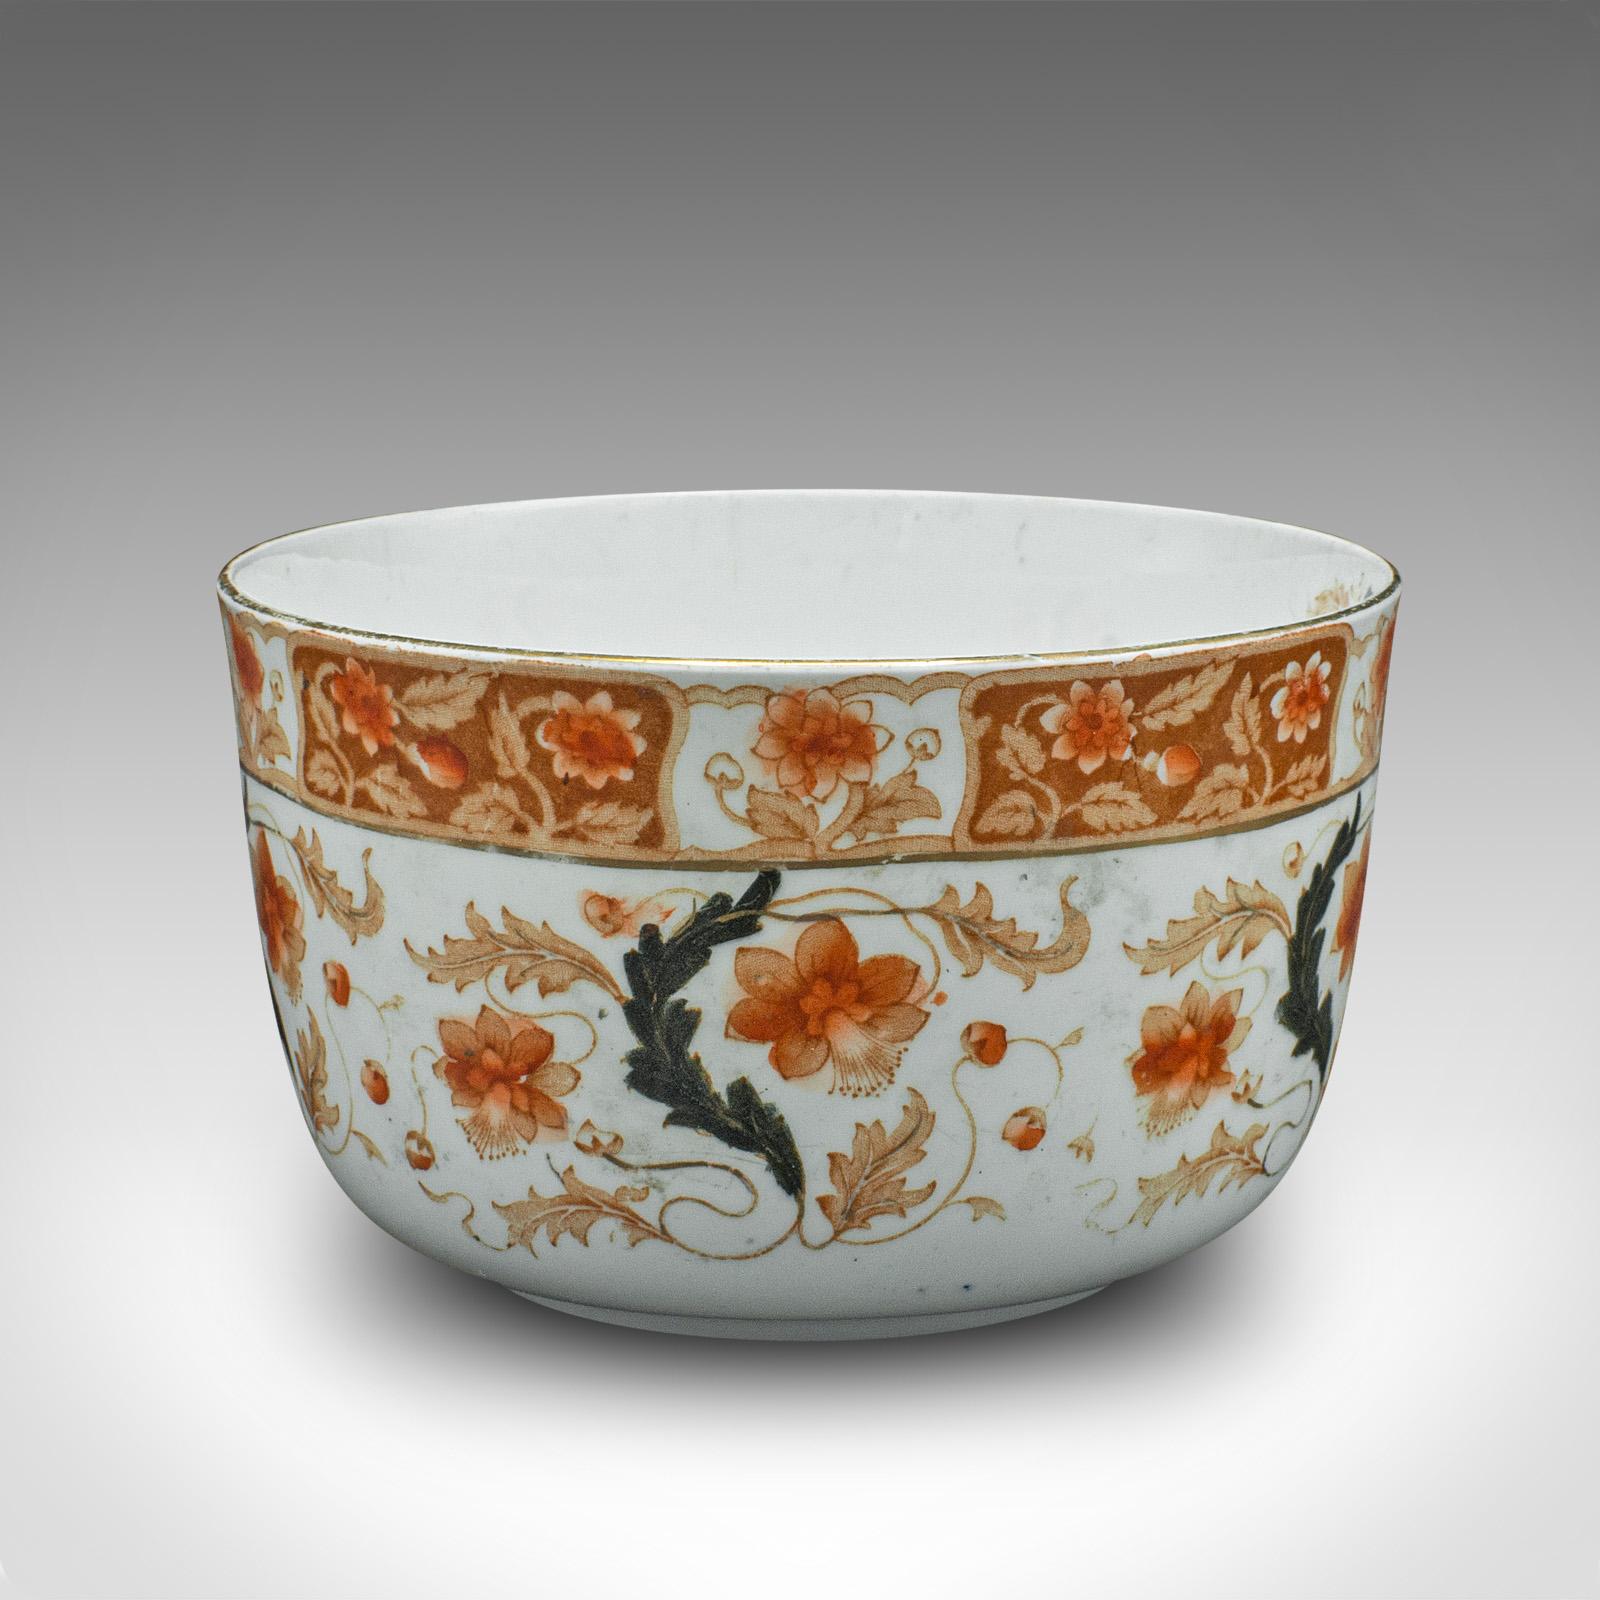 Antique Decorative Bowl, Continental, Ceramic, Serving Dish, Victorian, C.1900 In Good Condition For Sale In Hele, Devon, GB